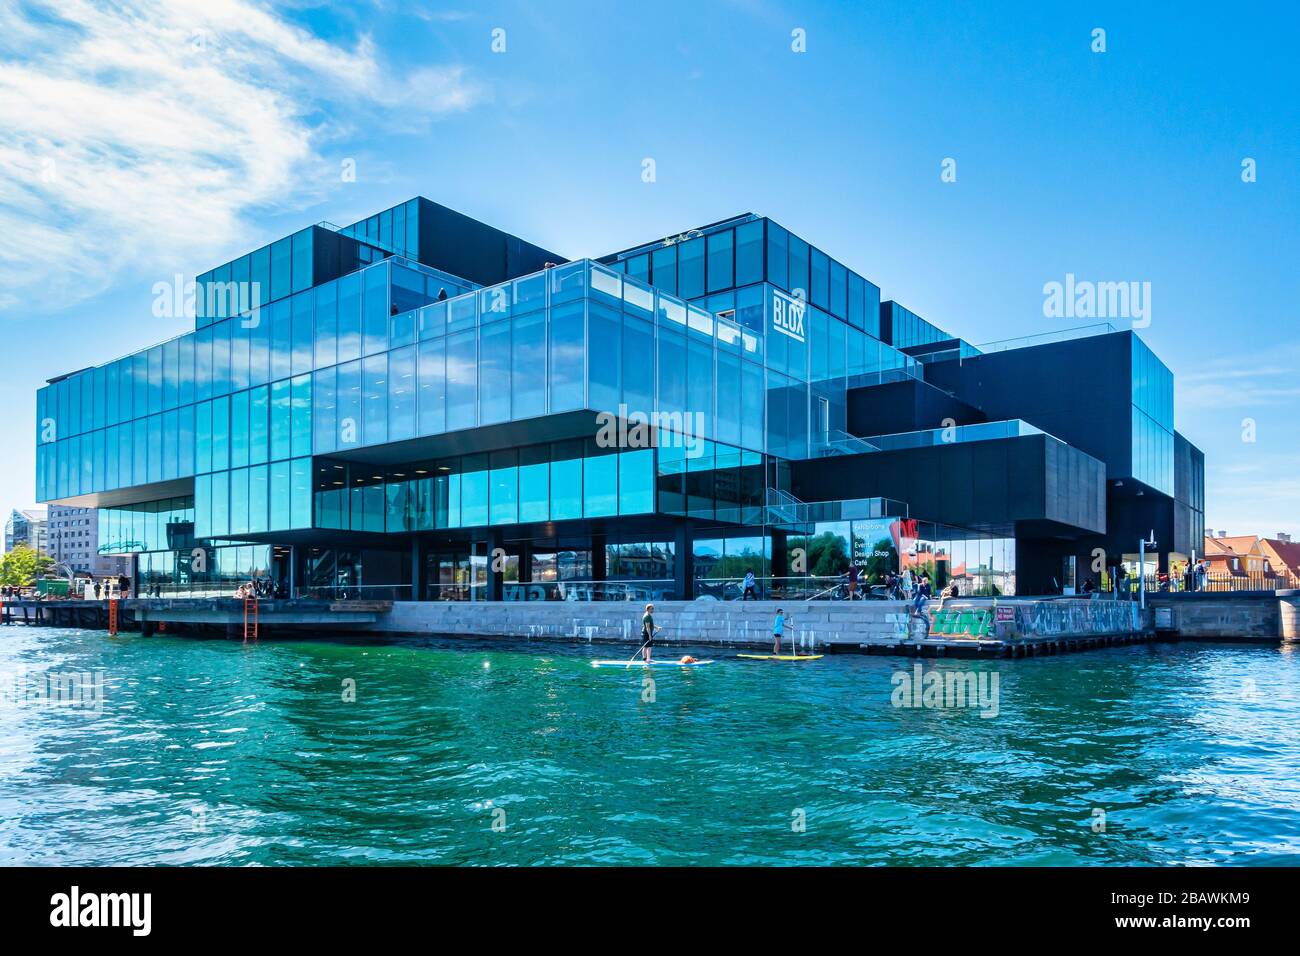 BLOX Architecture, design and new ideas building Dansk Design center Bryghusgade Copenhagen harbour Copenhagen Denmark Europe Stock Photo